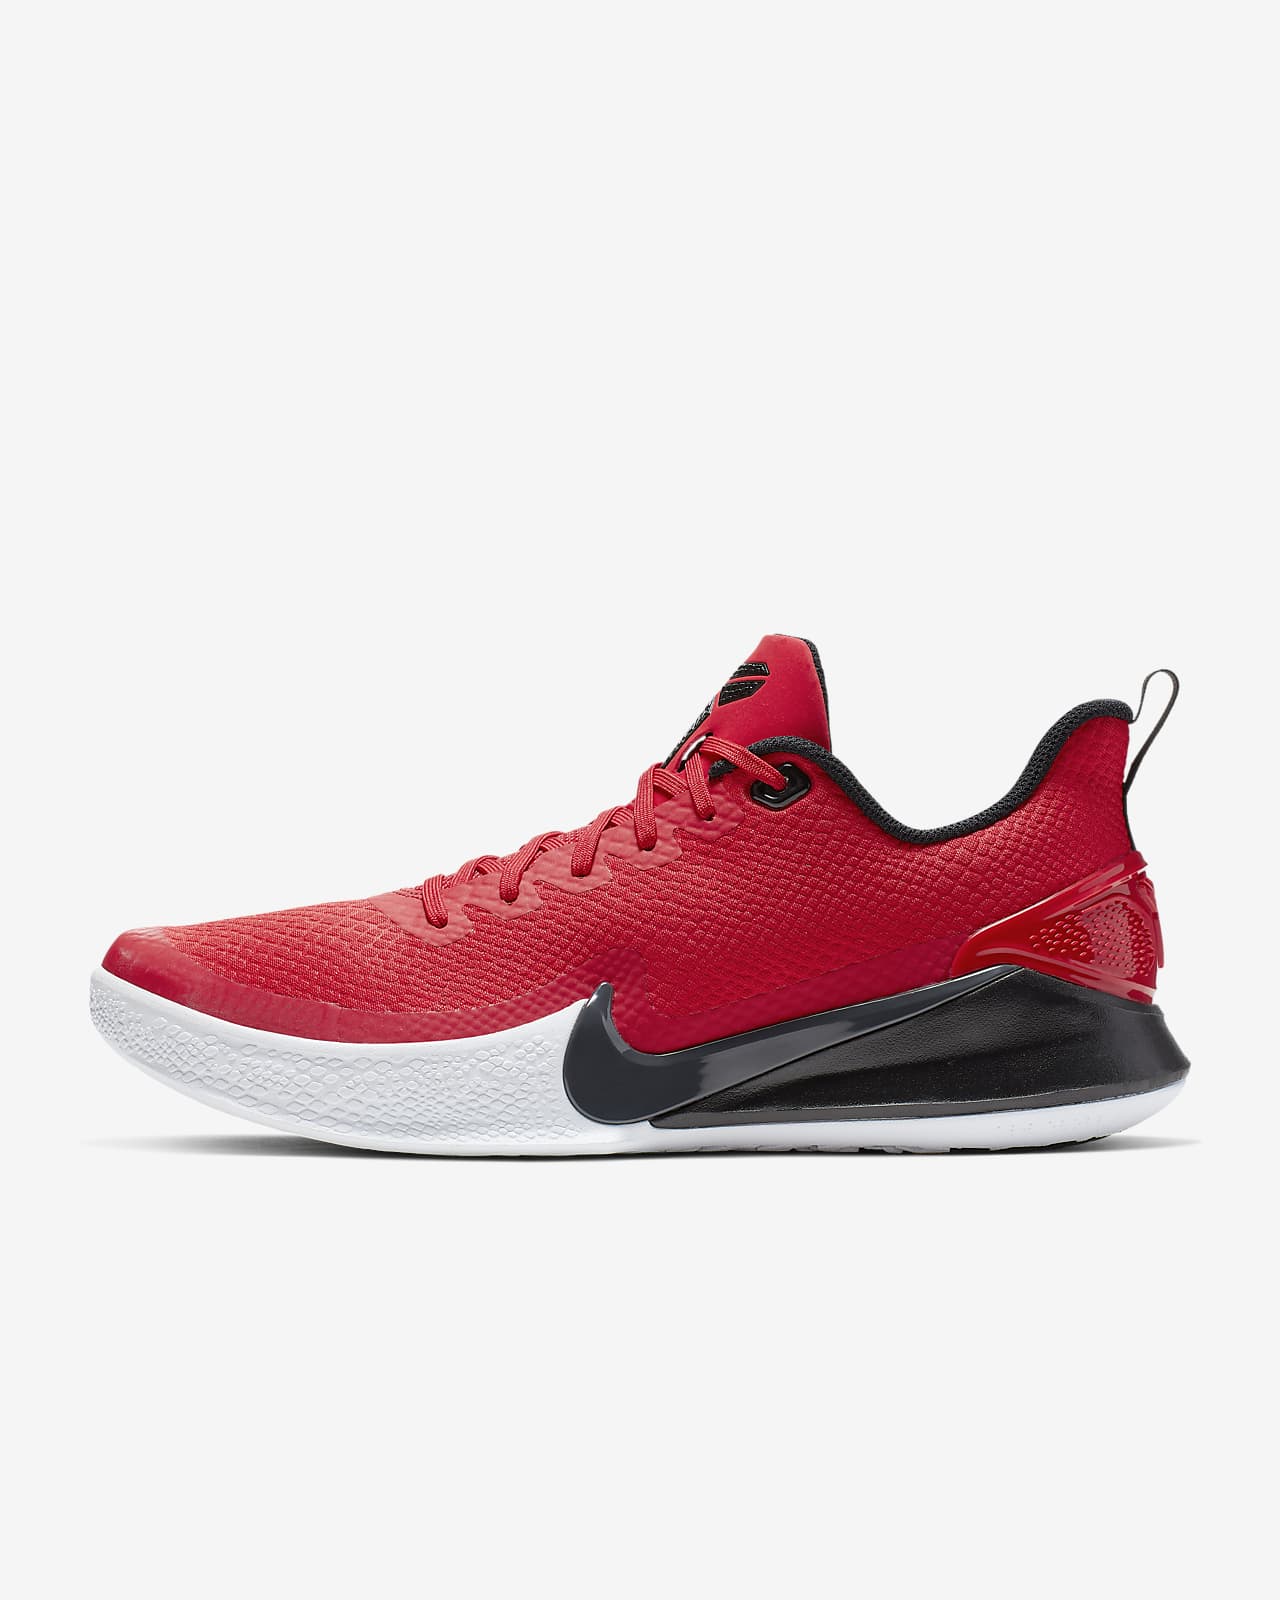 Mamba Focus Basketball Shoe. Nike SG